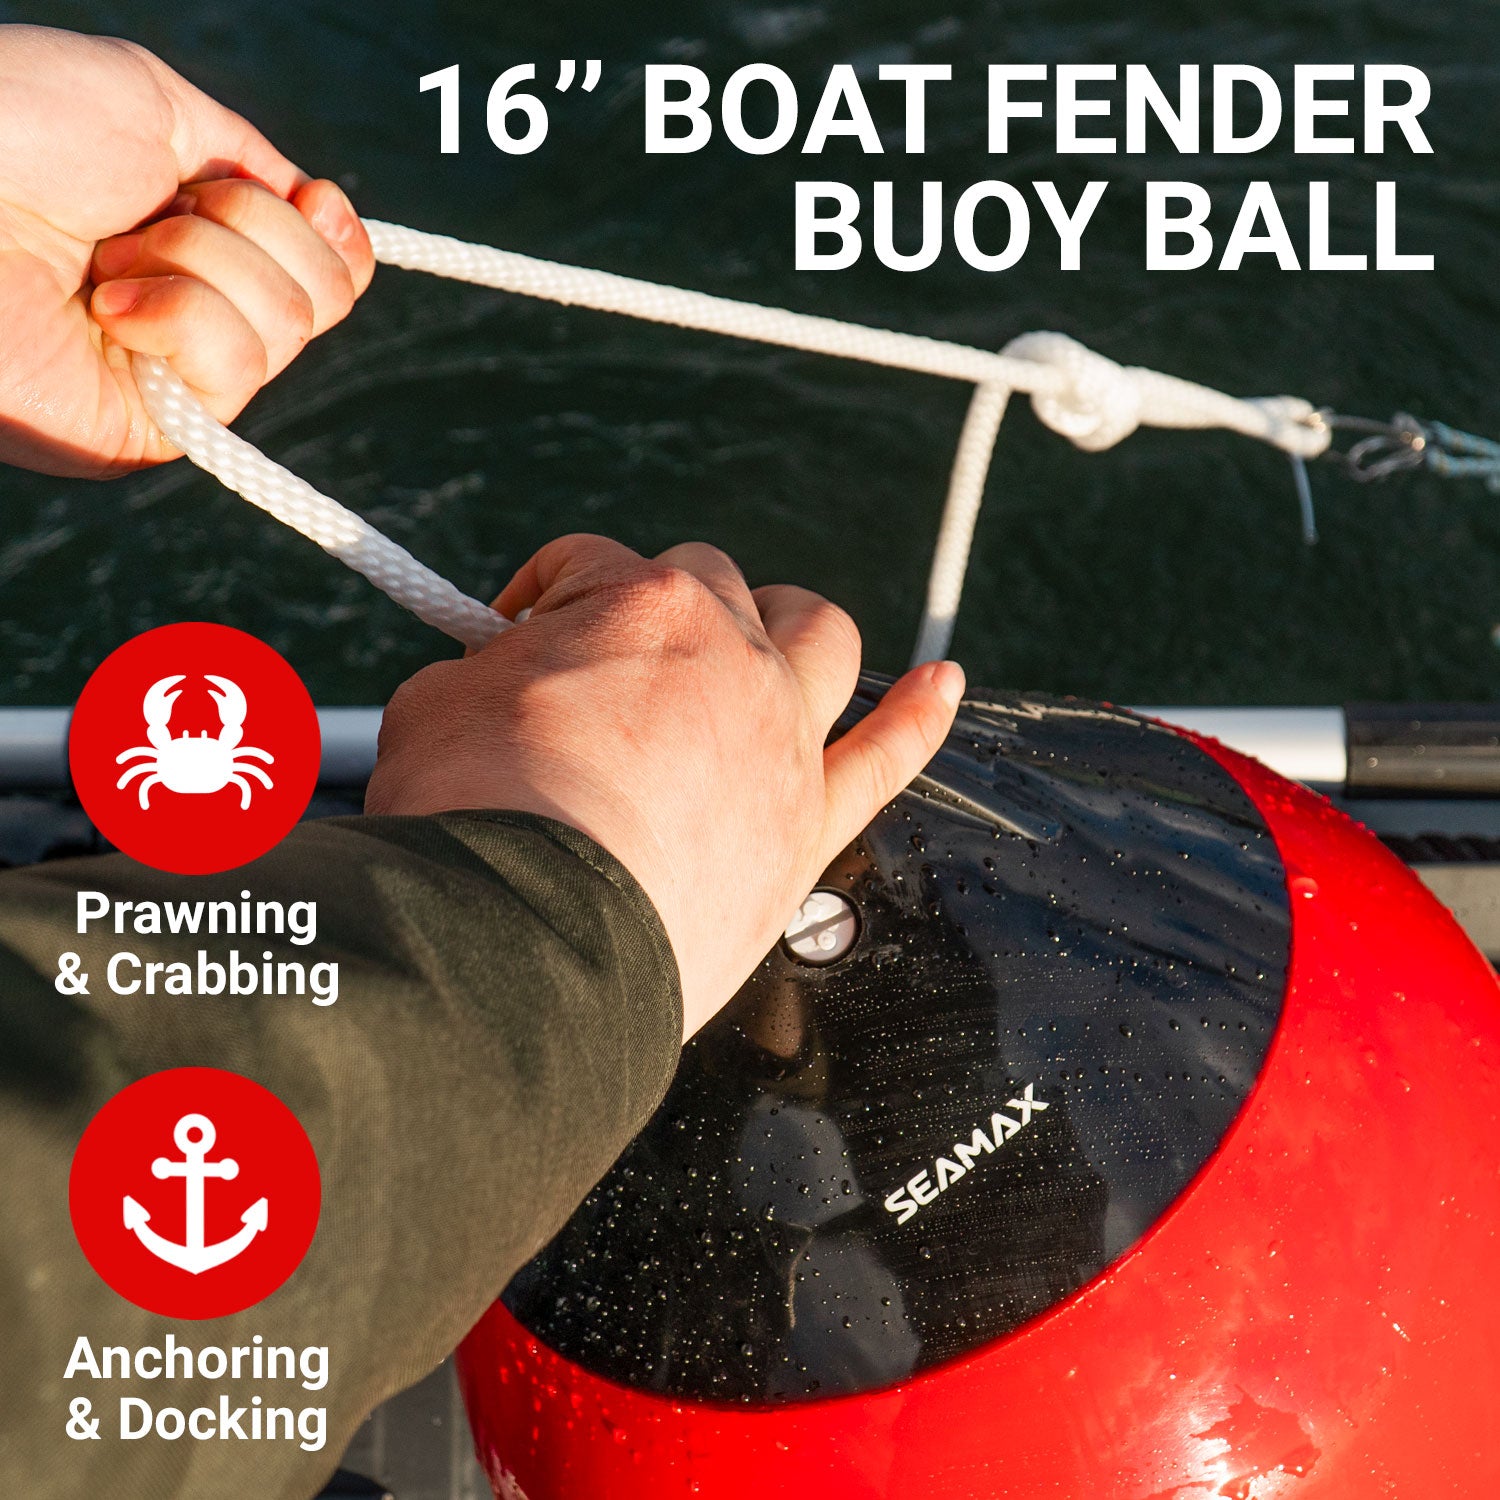 SEAMAX Boat Fenders Ball Round Anchor Buoy, 12 x 15, Heavy-Duty